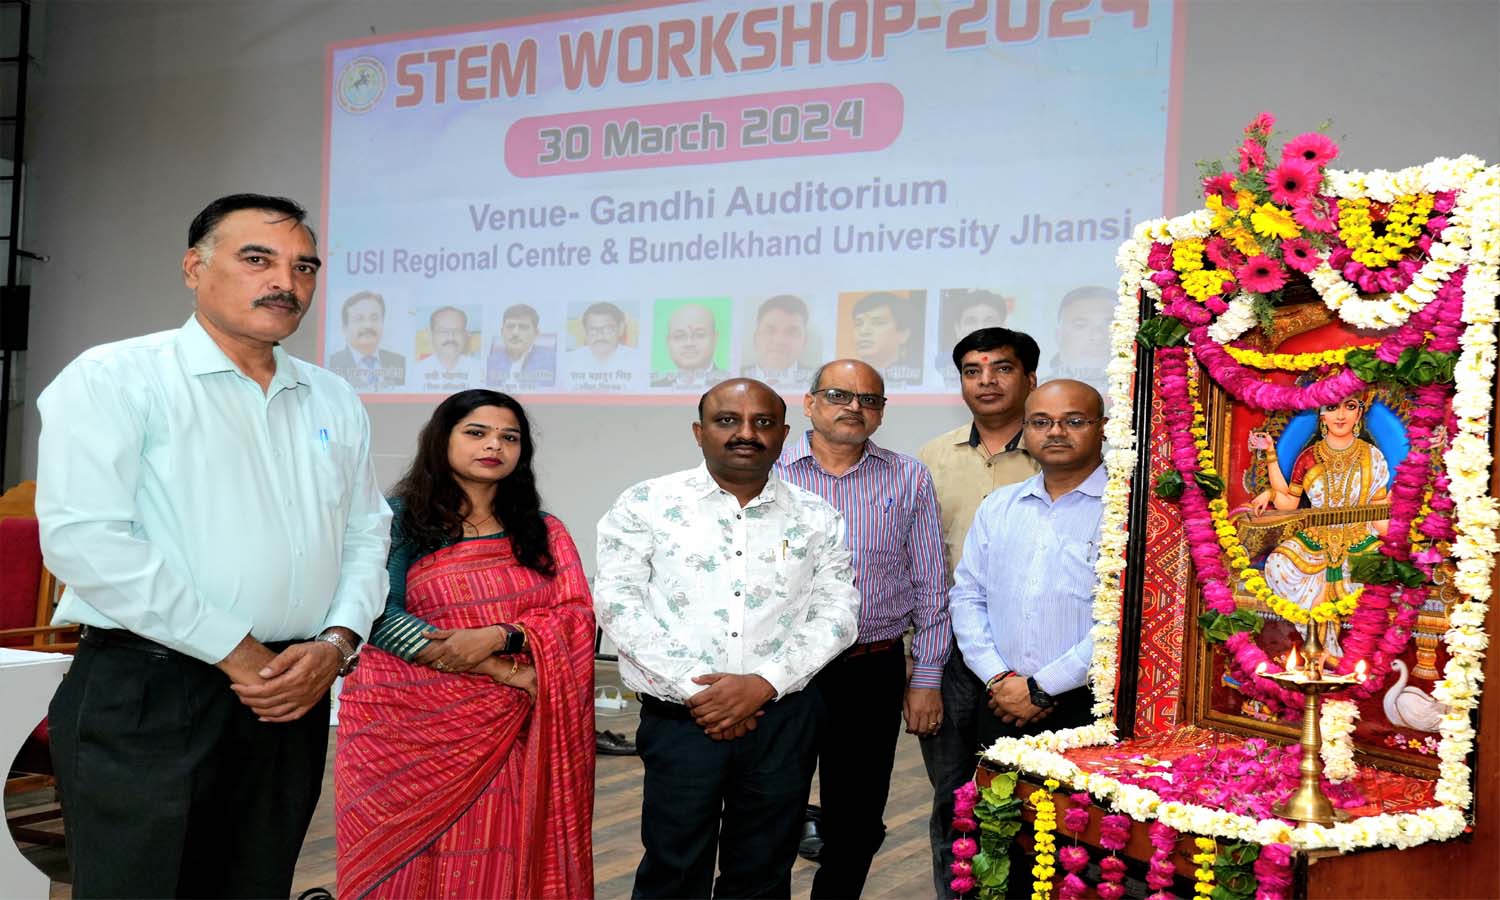 STEM Workshop-2024 organized in Bundelkhand University